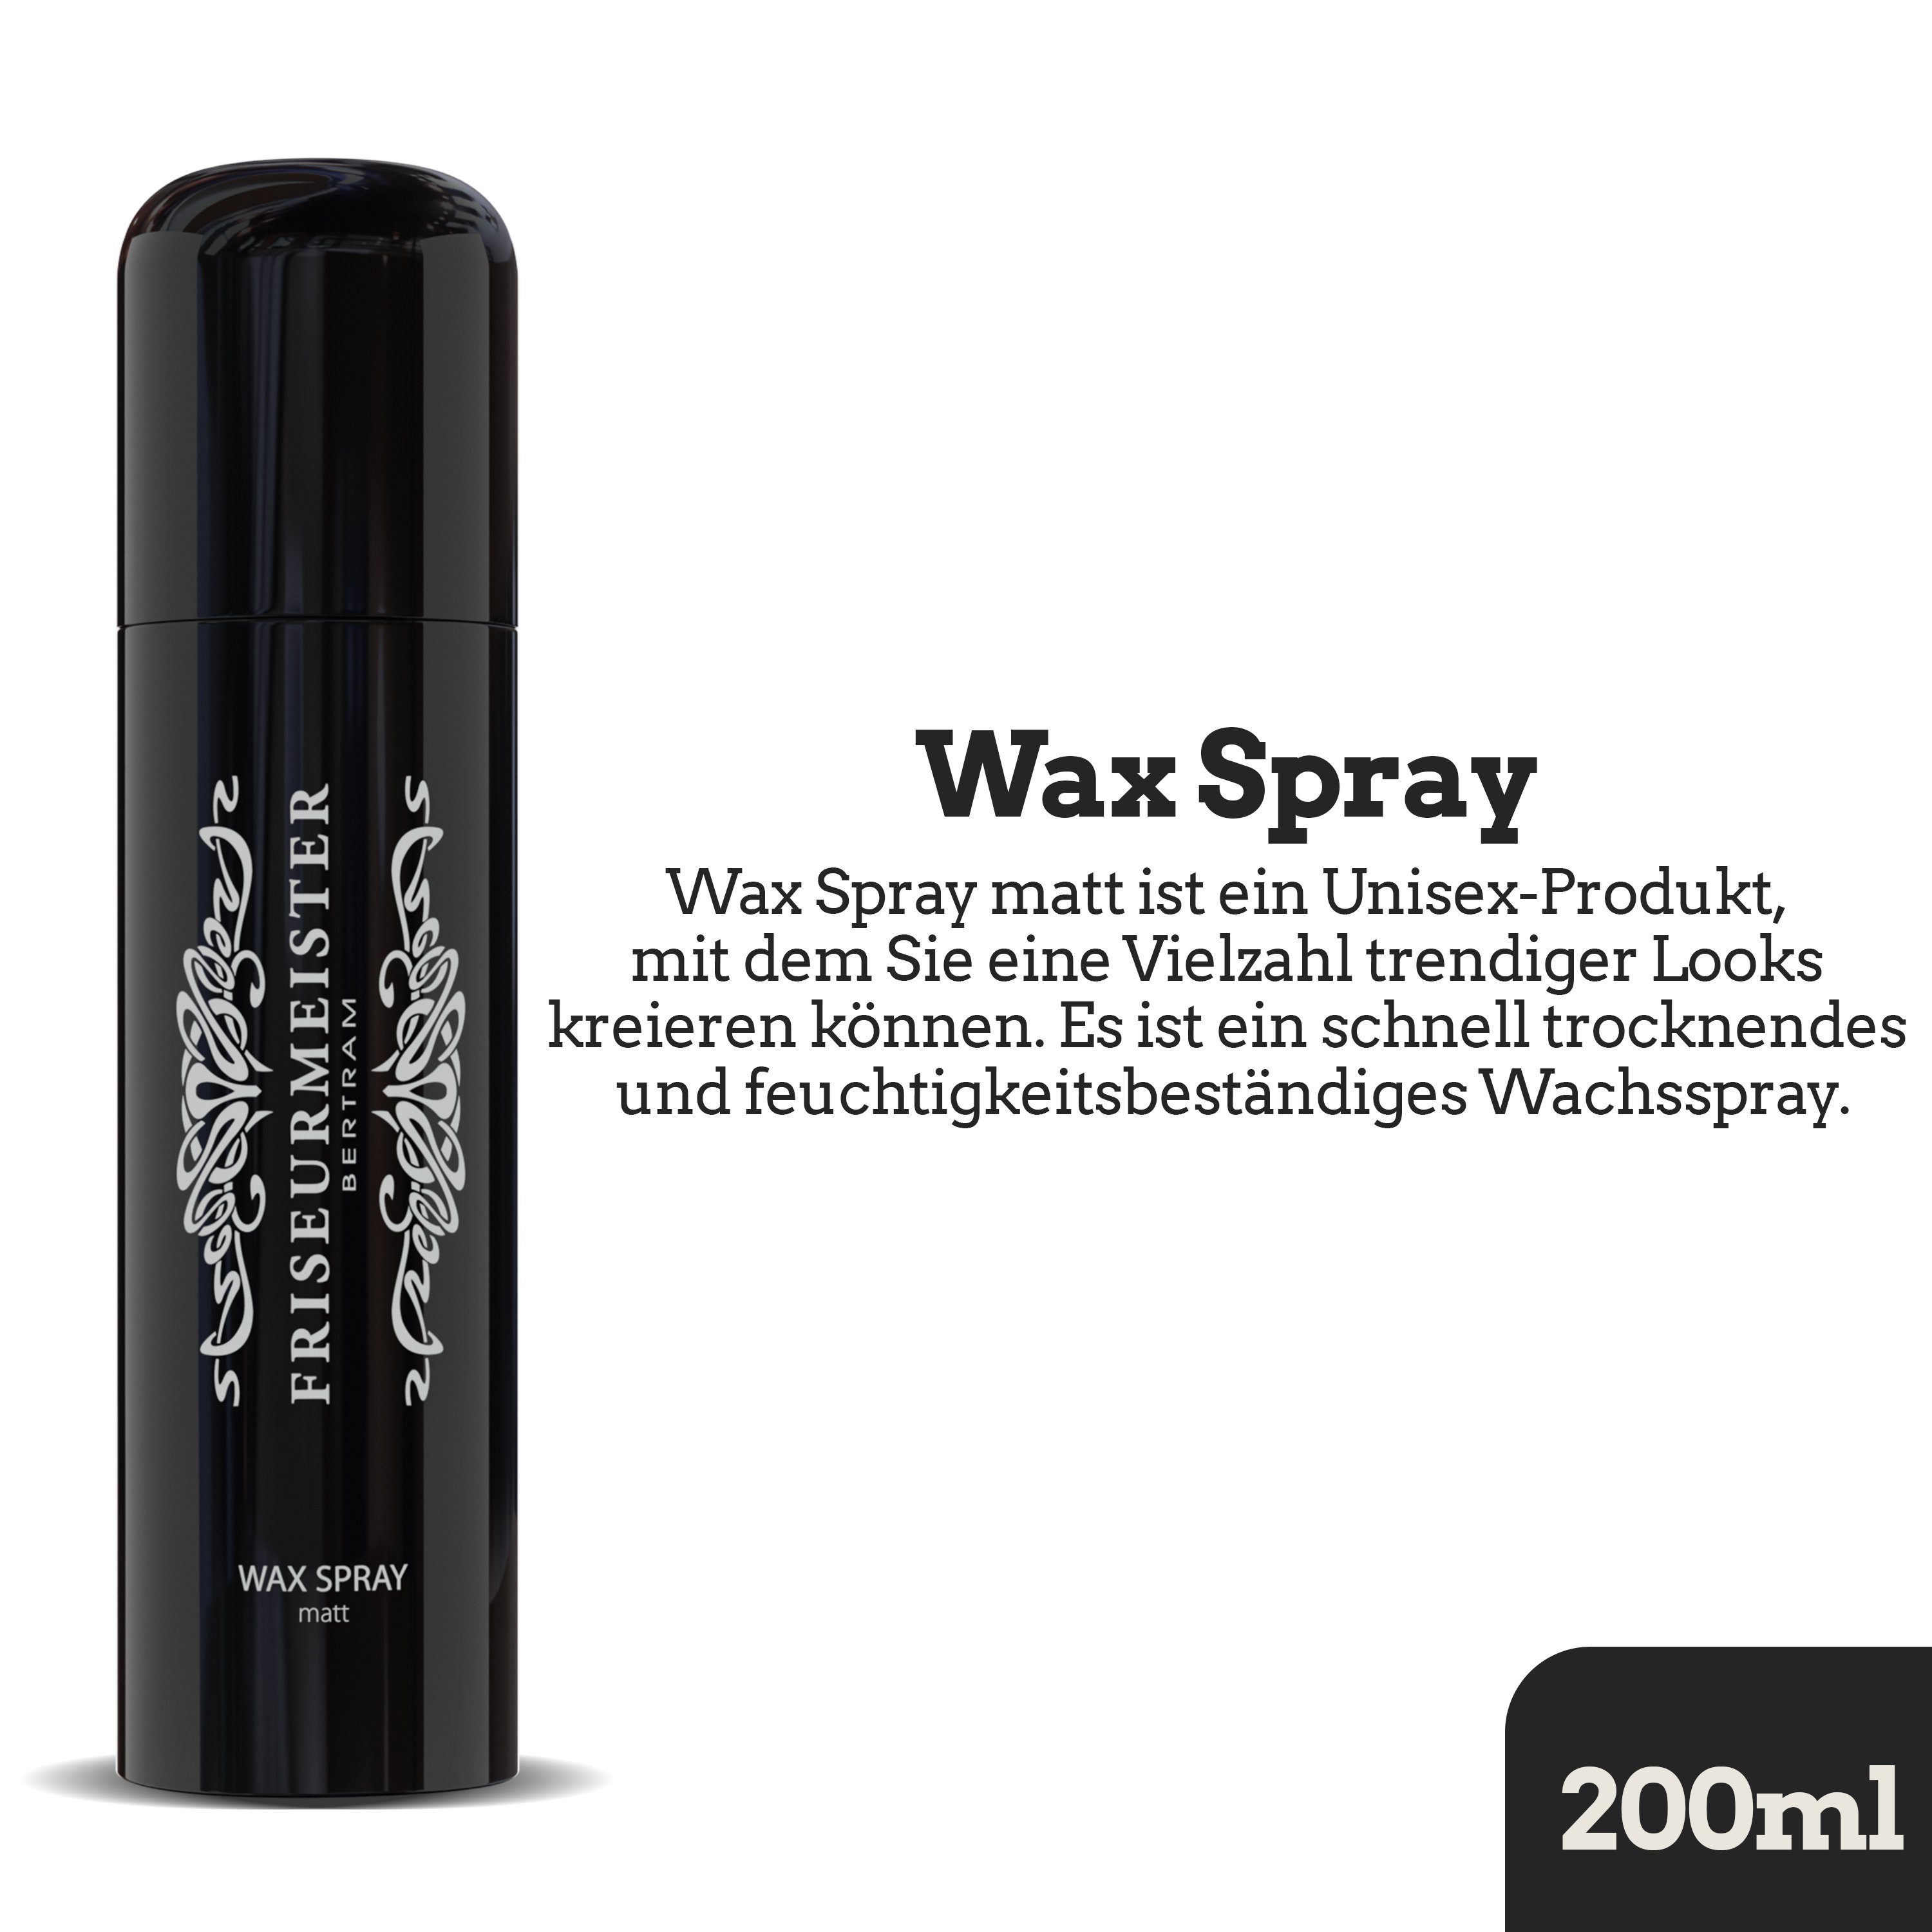 Haar soft 200ml Friseurmeister Wax Spray Styling Looks Wax matt schnell trendige Haarpflege-Spray Haarspray trocknend -